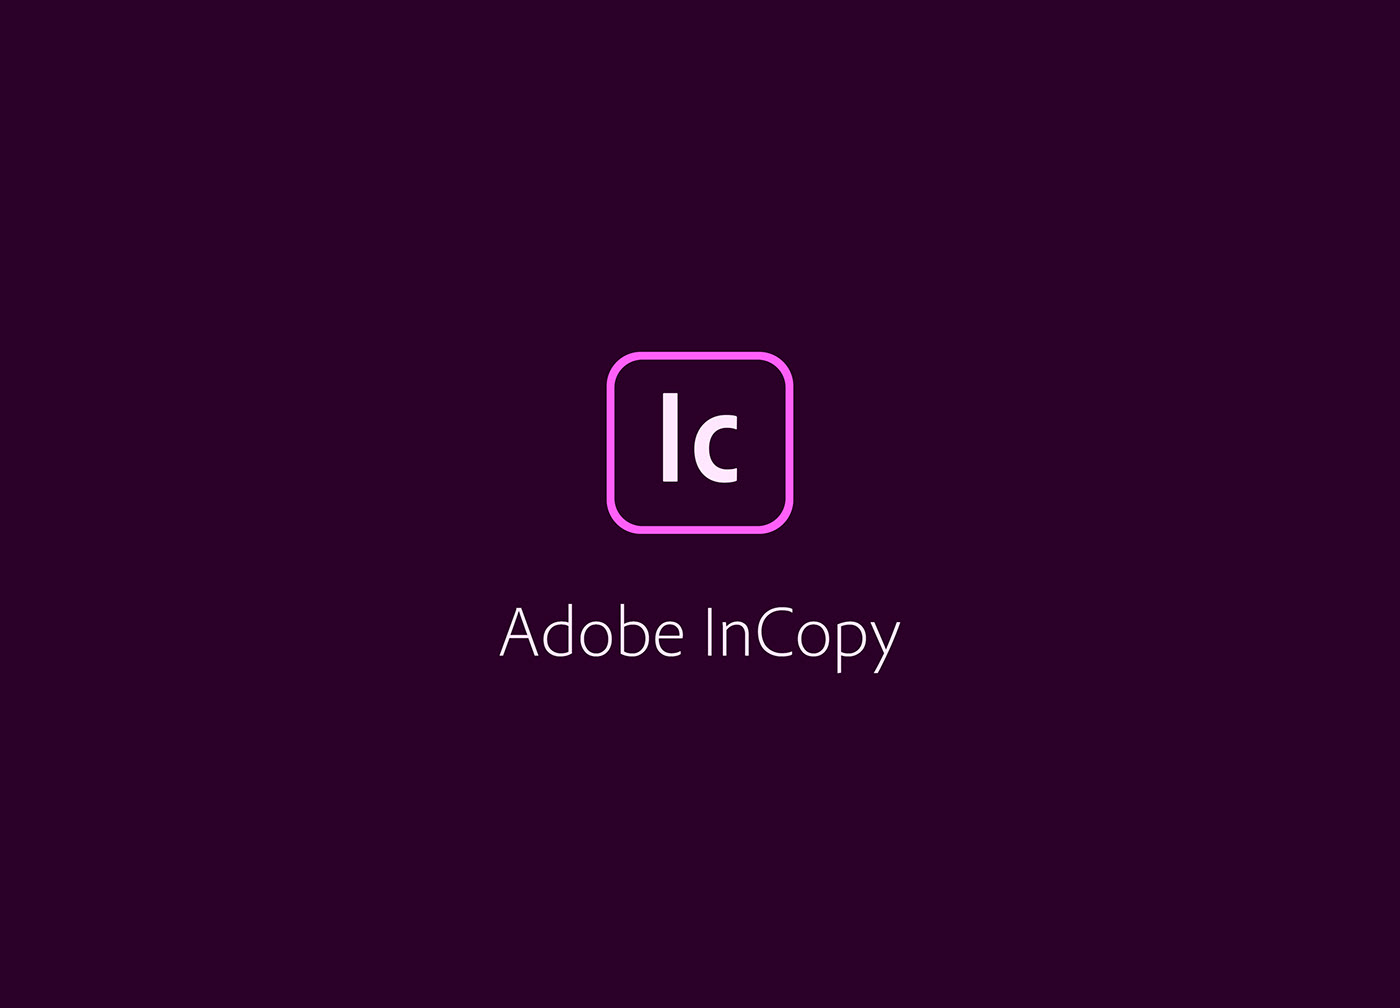 adobe cc Creative Cloud design download free Icon Program vector